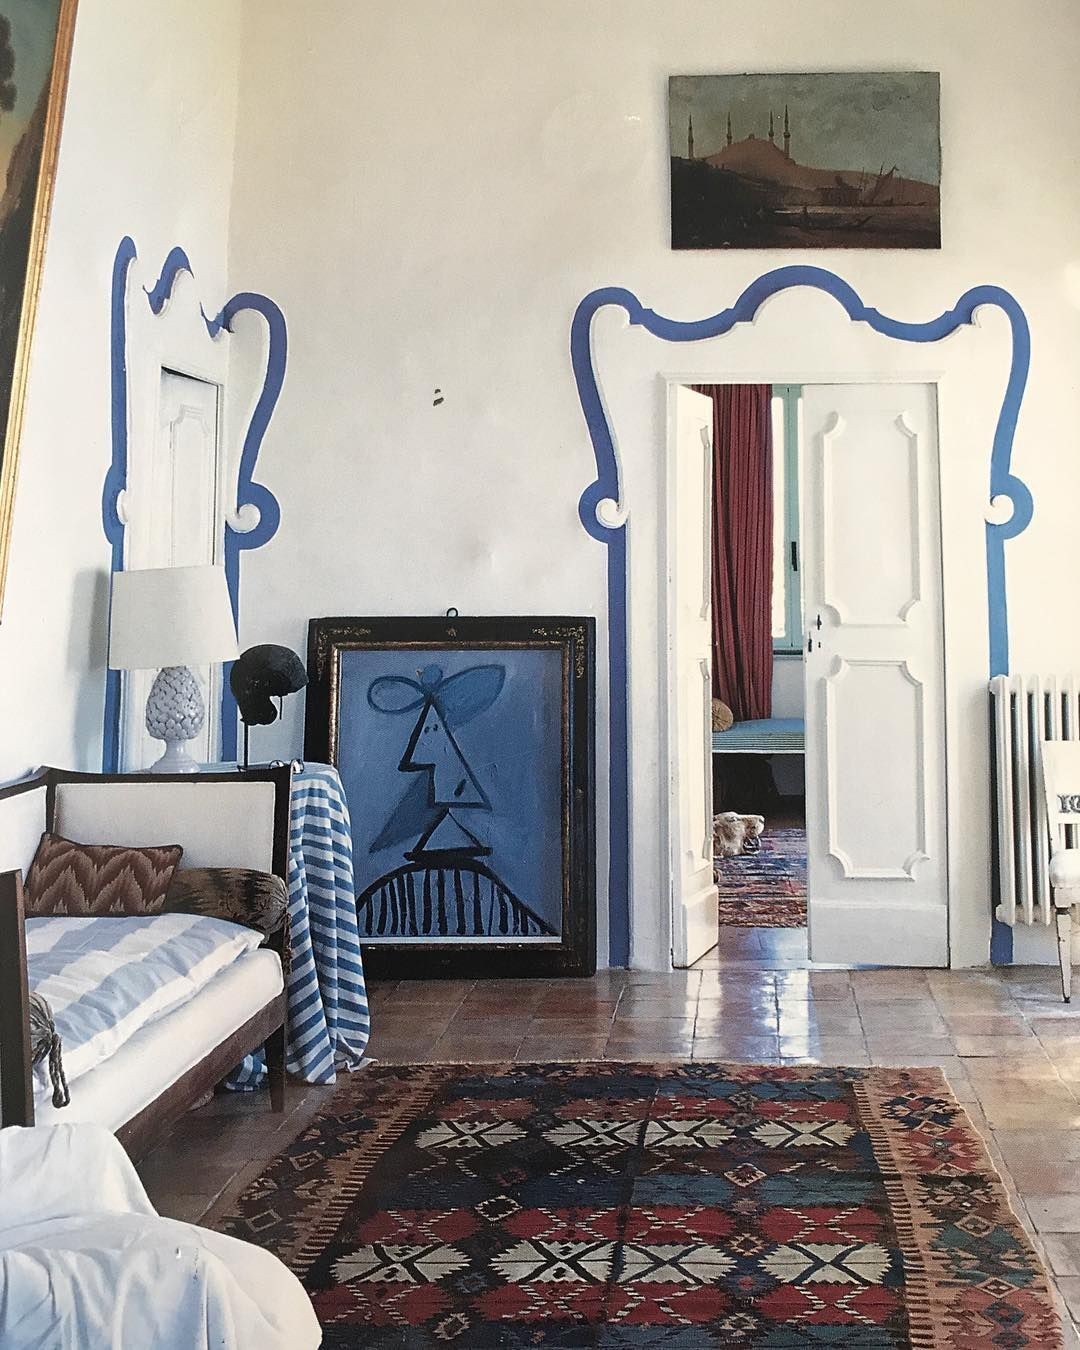 Nicola del Roscio’s house in Gaeta